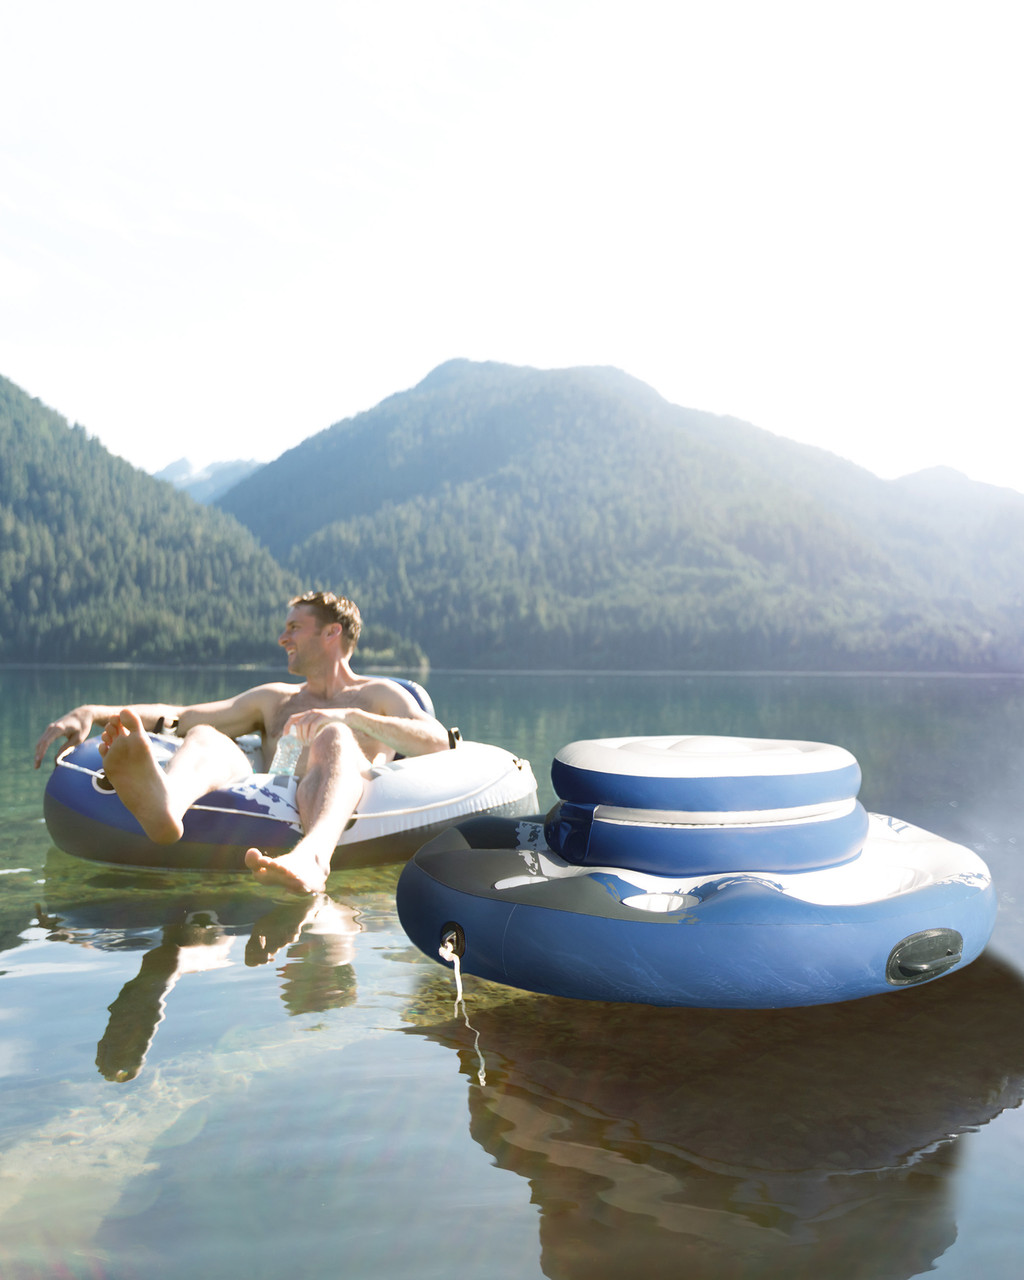 INTEX Mega Chill Floating Inflatable Cooler